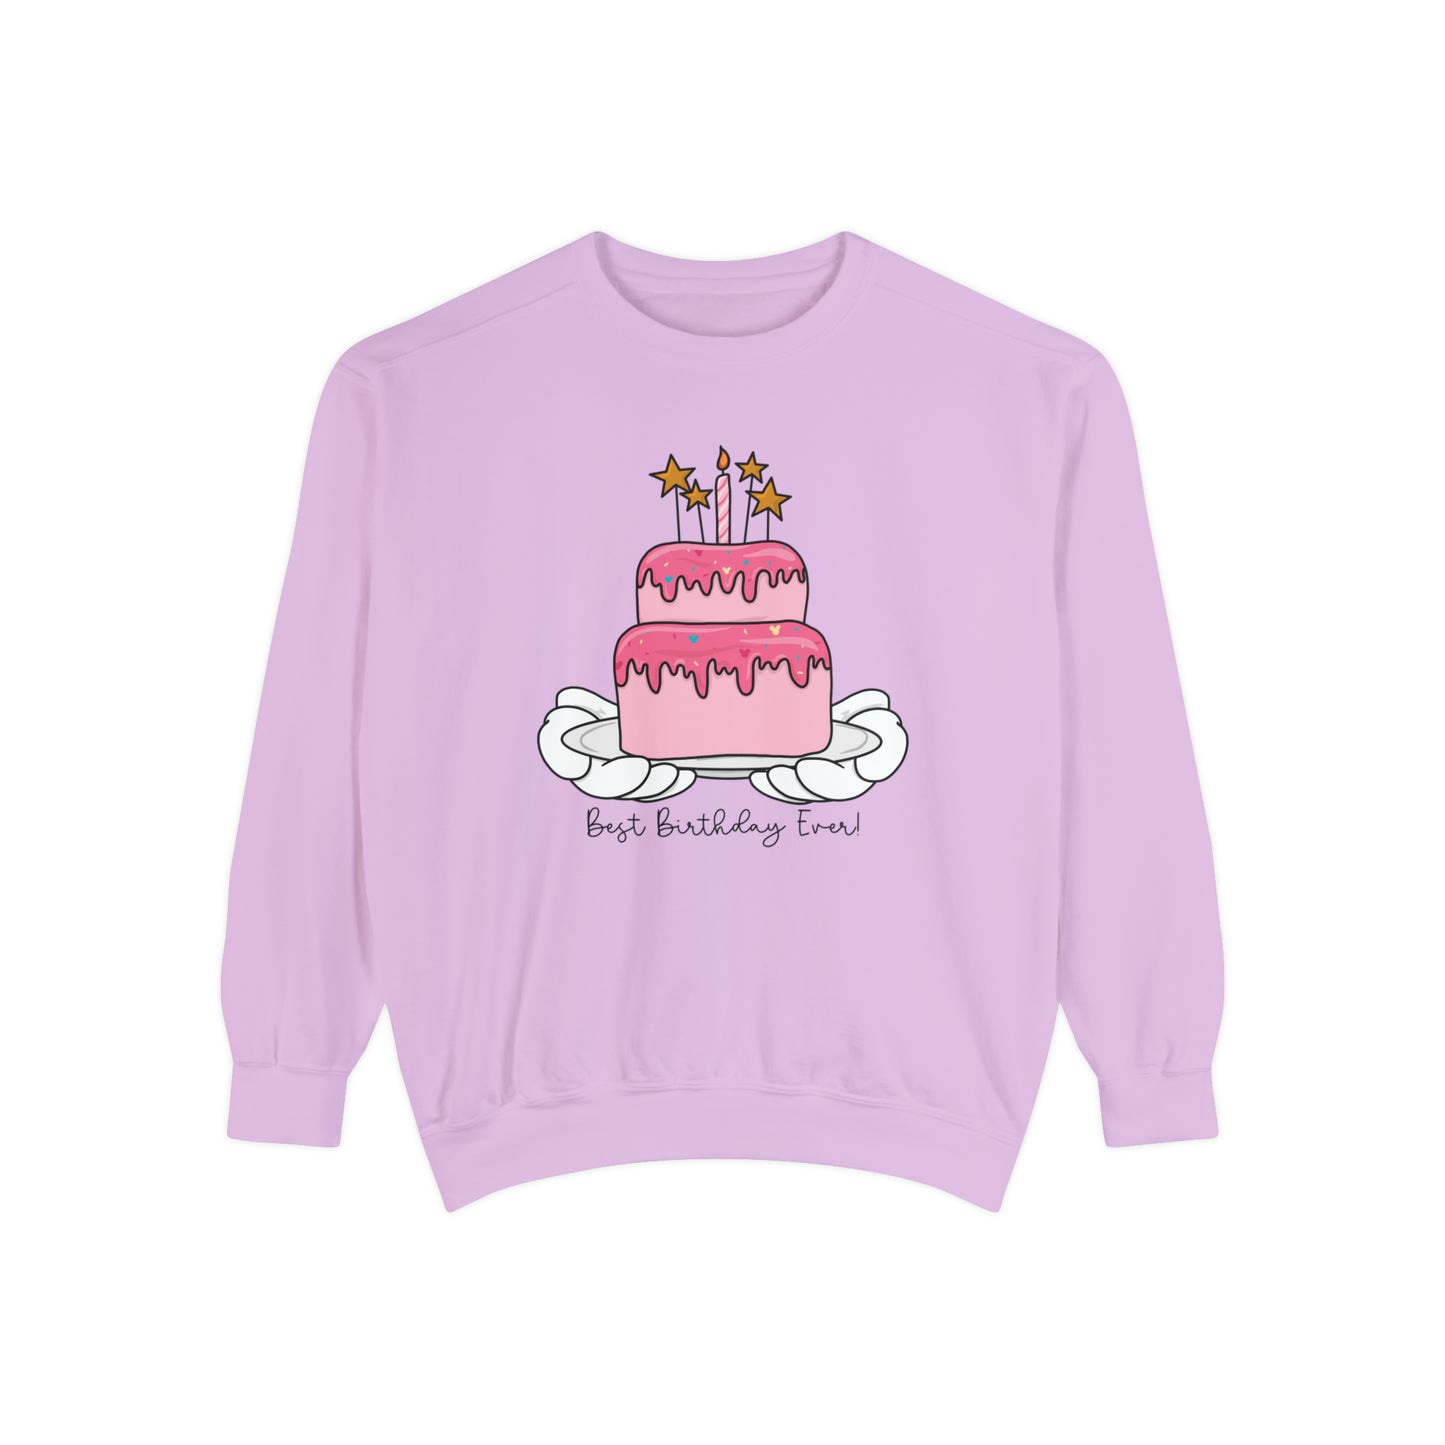 Adult Bday Cake - Pink Crew